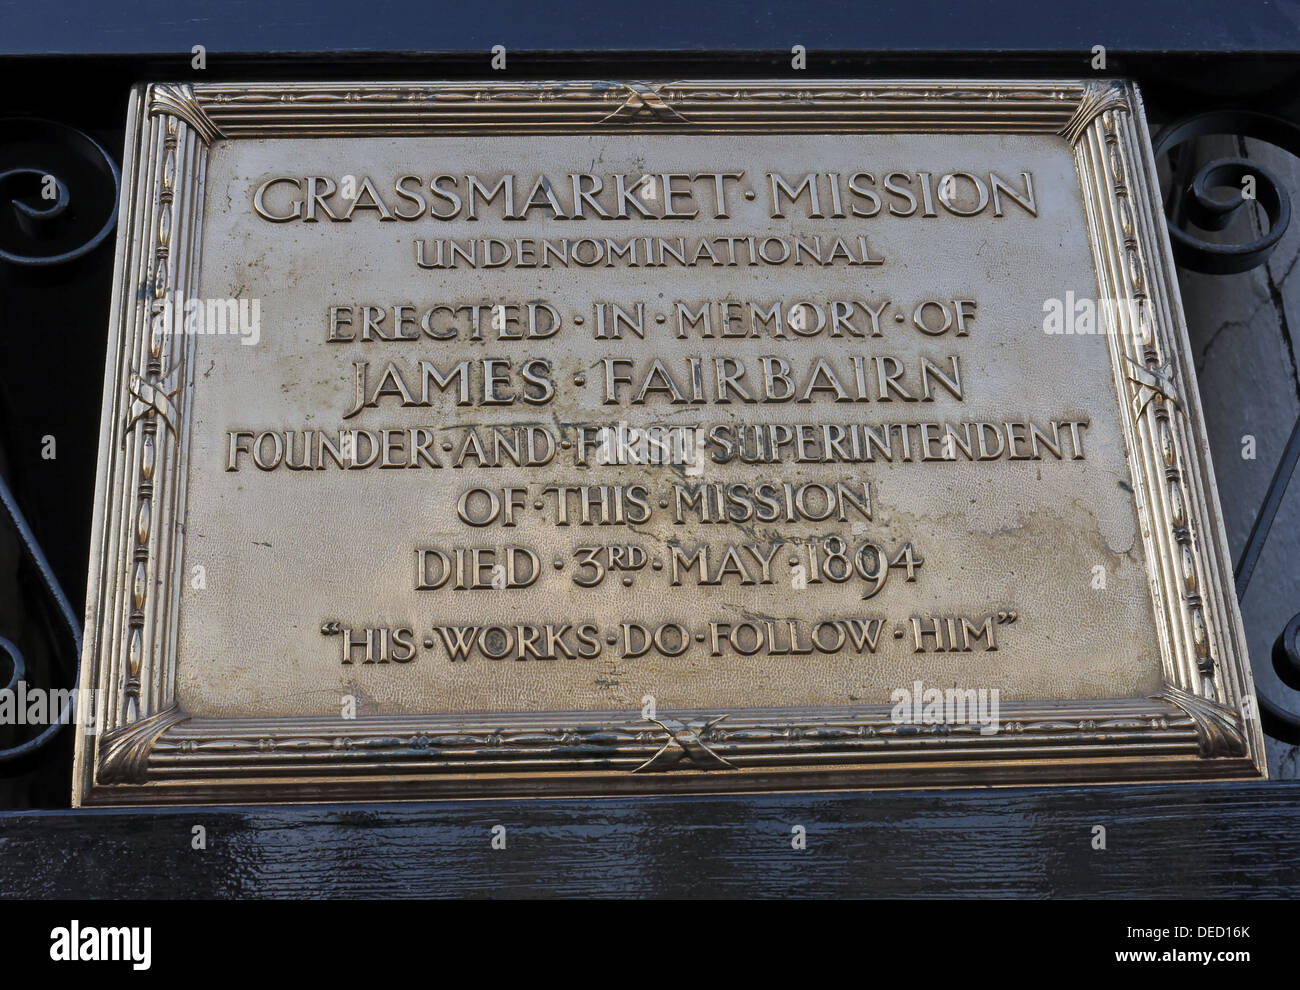 Plaque, Grassmarket Mission, erected in Memory of James Fairbairn, Edinburgh,Scotland, UK Stock Photo